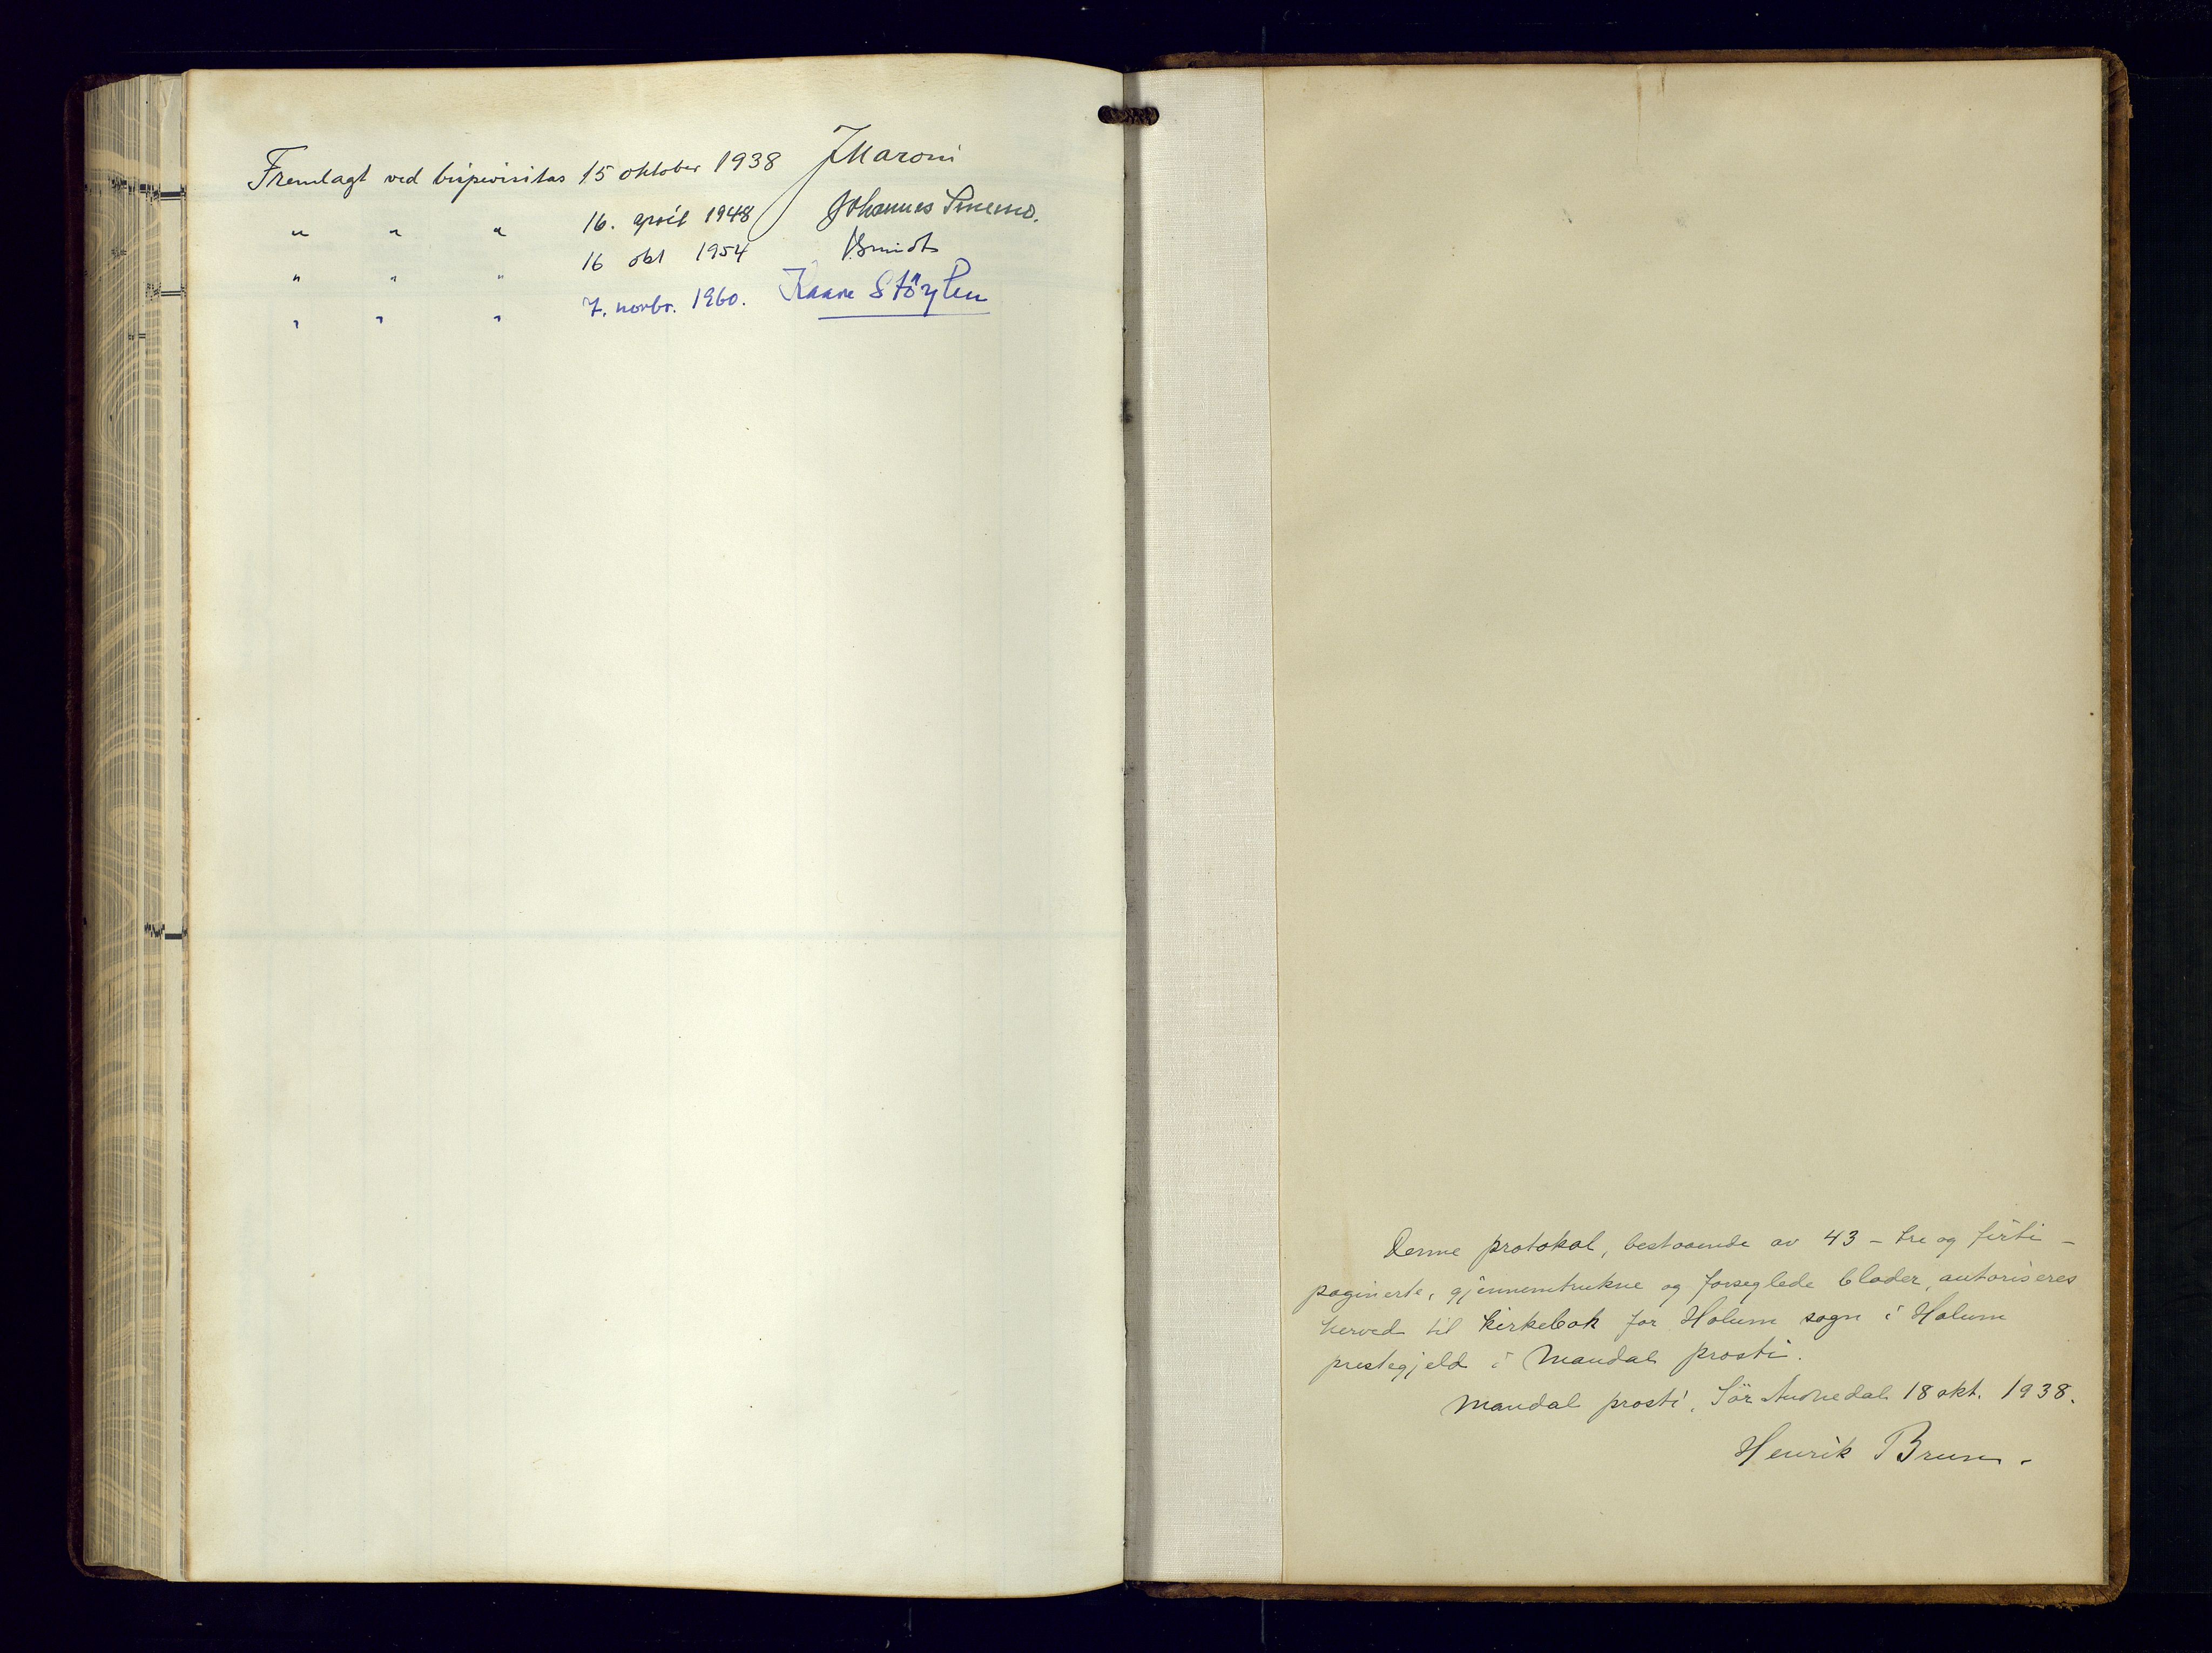 Holum sokneprestkontor, SAK/1111-0022/F/Fb/Fba/L0007: Parish register (copy) no. B-7, 1933-1960